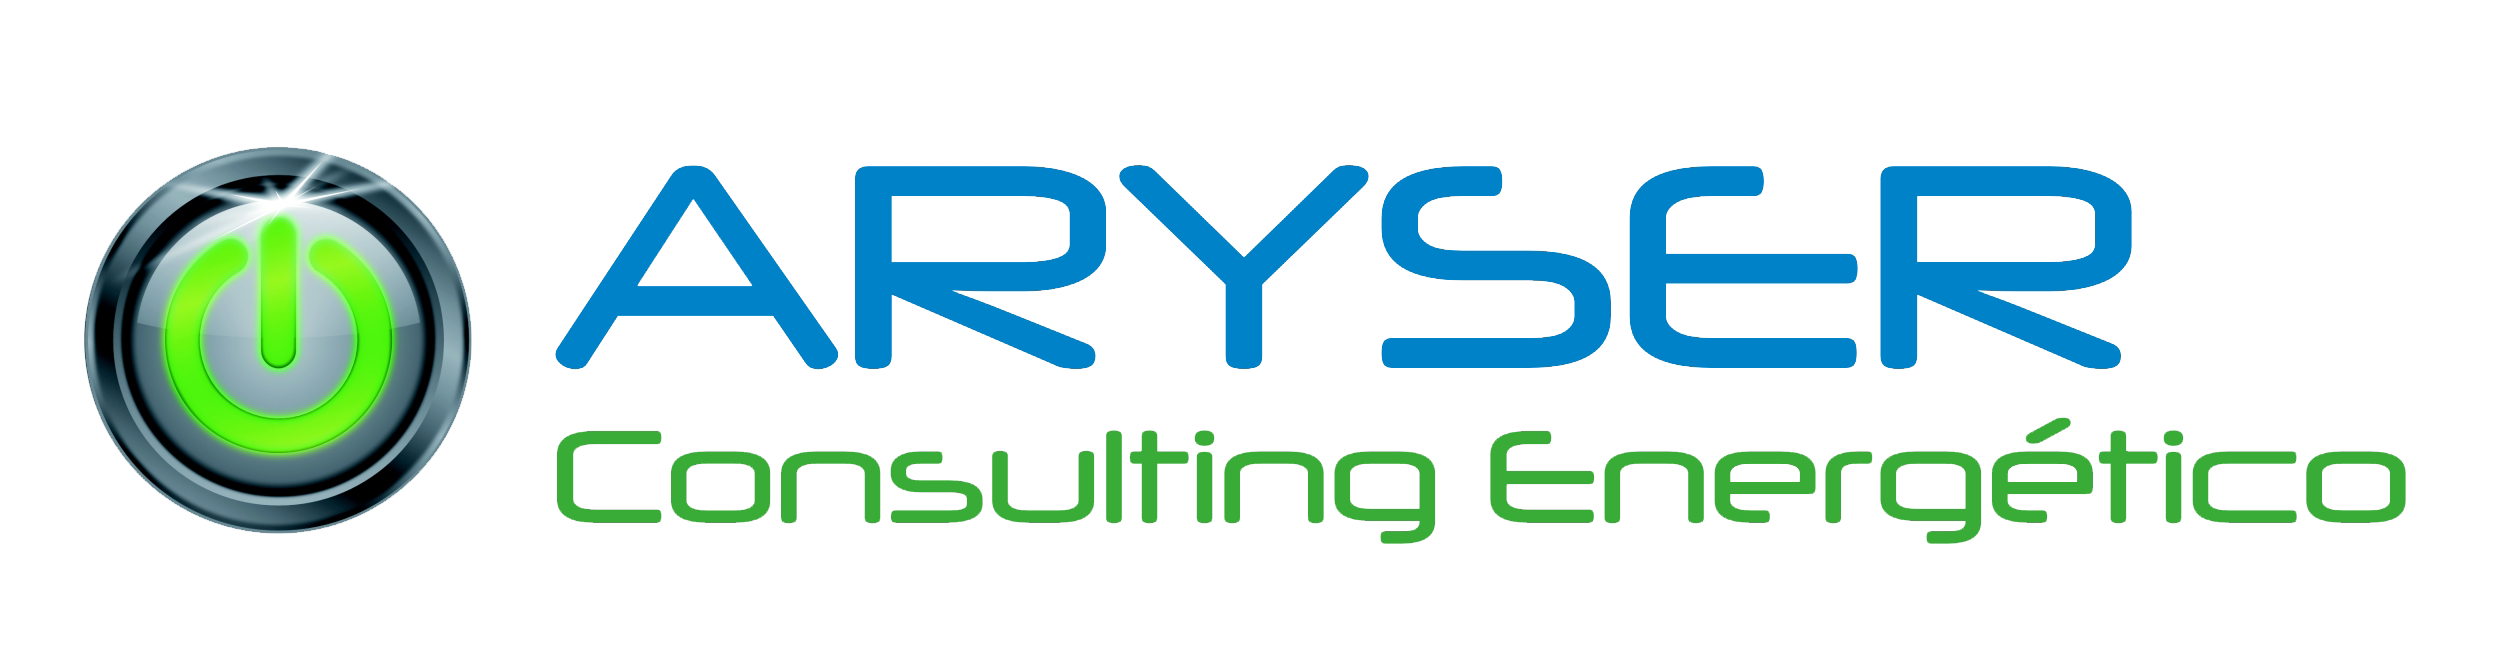 logo aryser nuevo